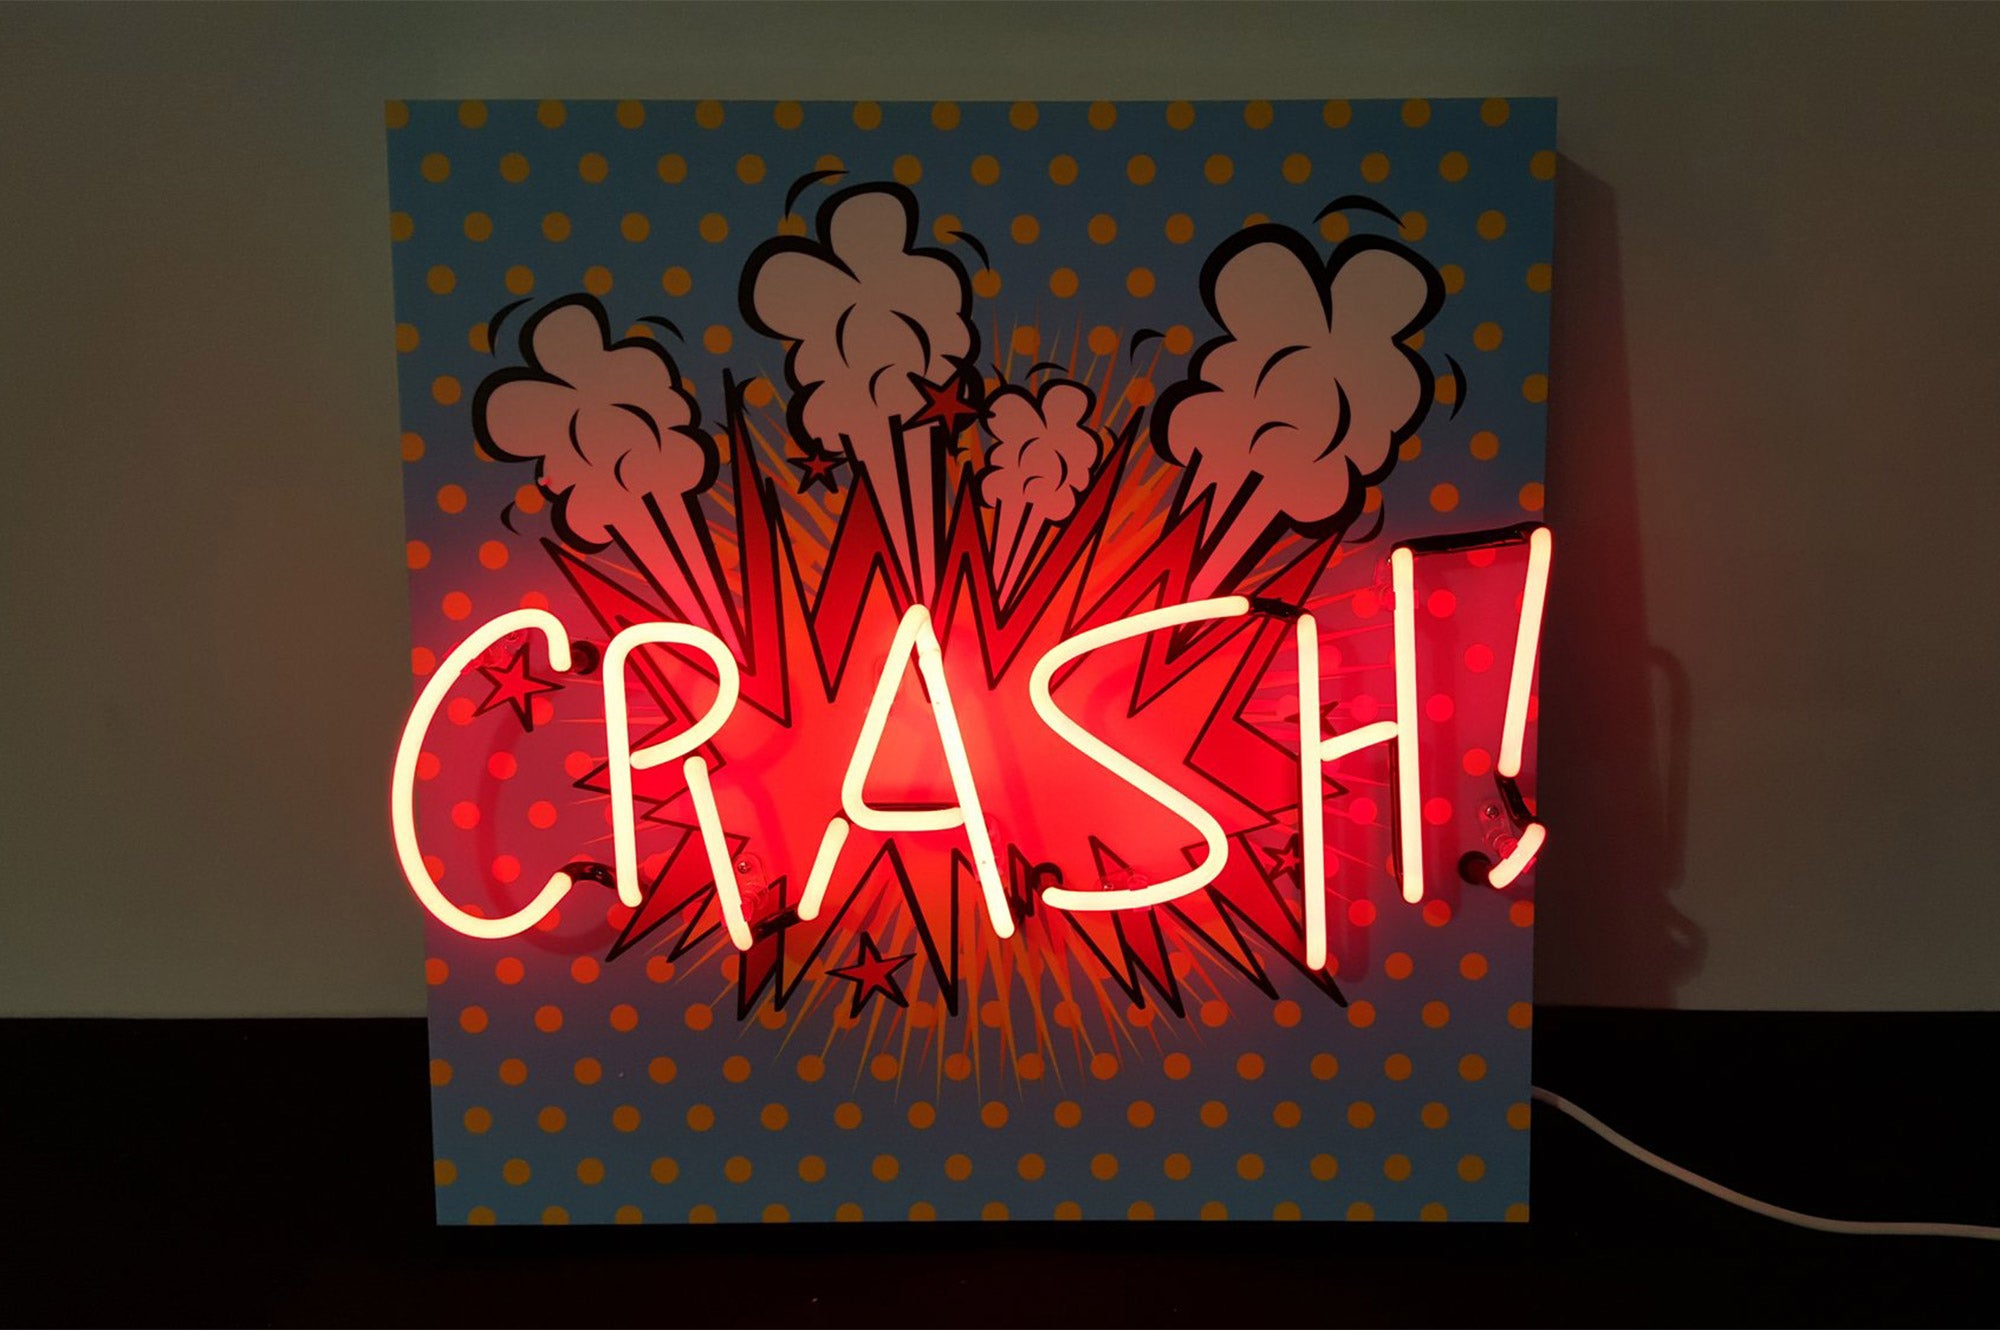 Crash! Neon Sign